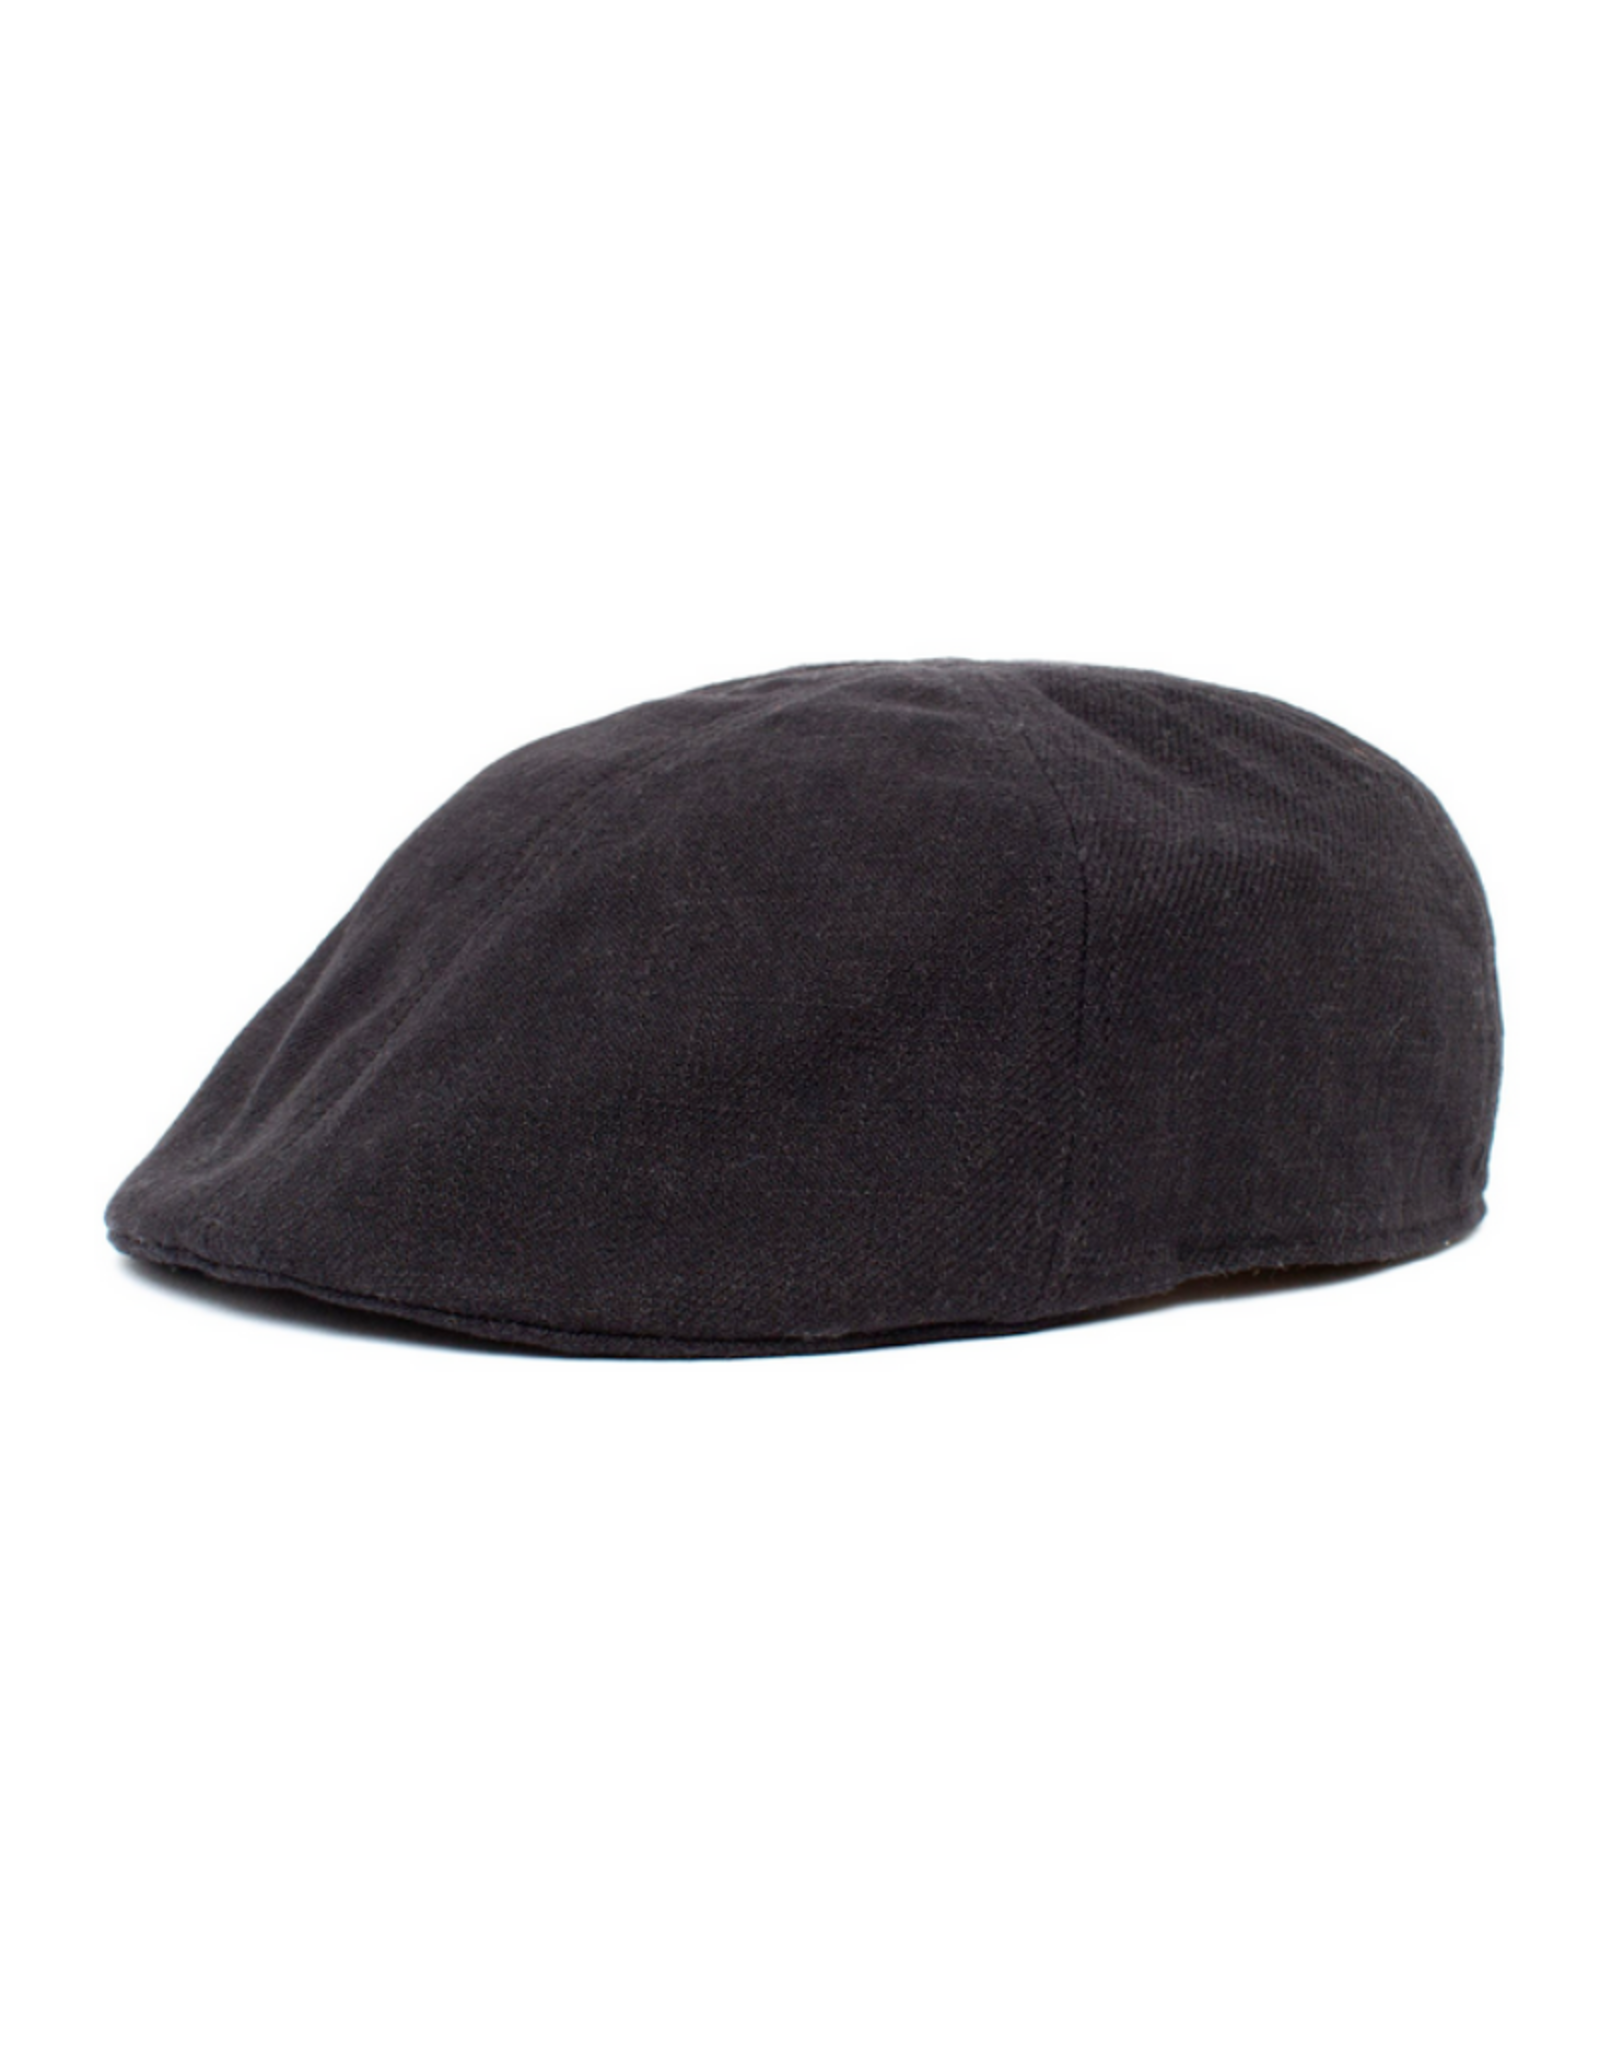 HAT-IVY CAP "THE RIPPLEY"